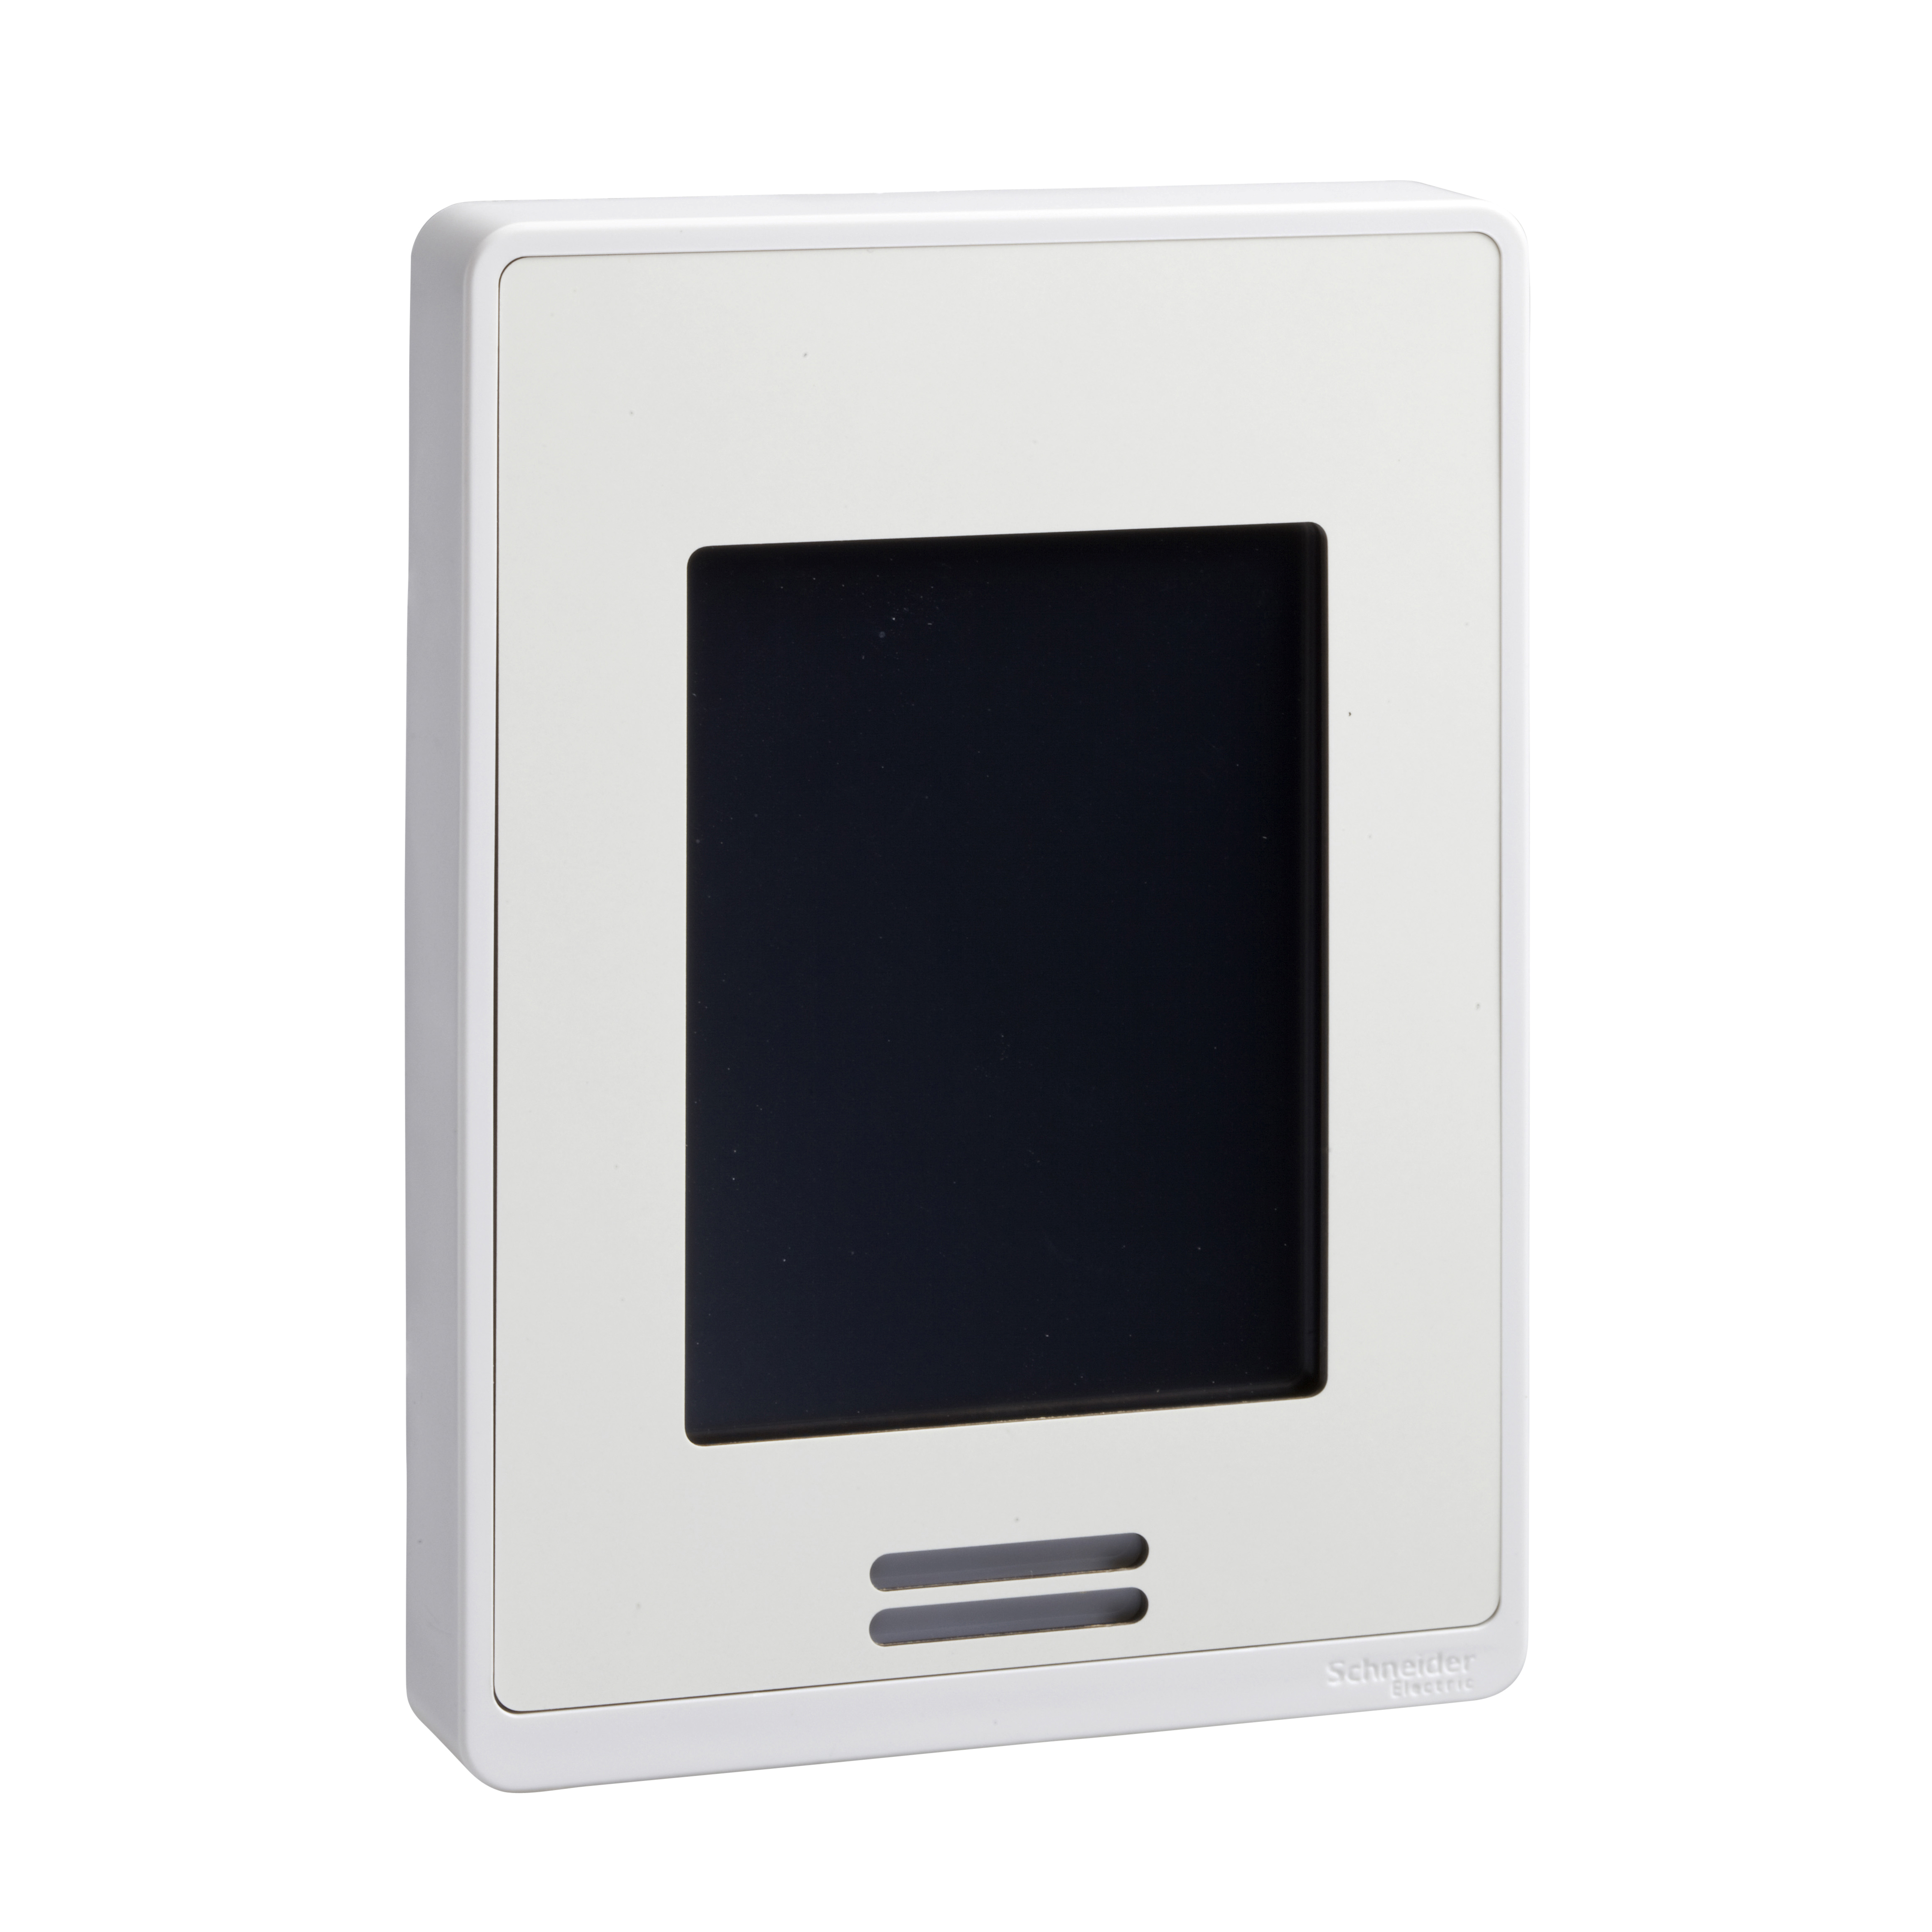 Line-Voltage Fan Coil Room Controller: BACnet MS/TP, RH sensor & control, White Case/Fascia